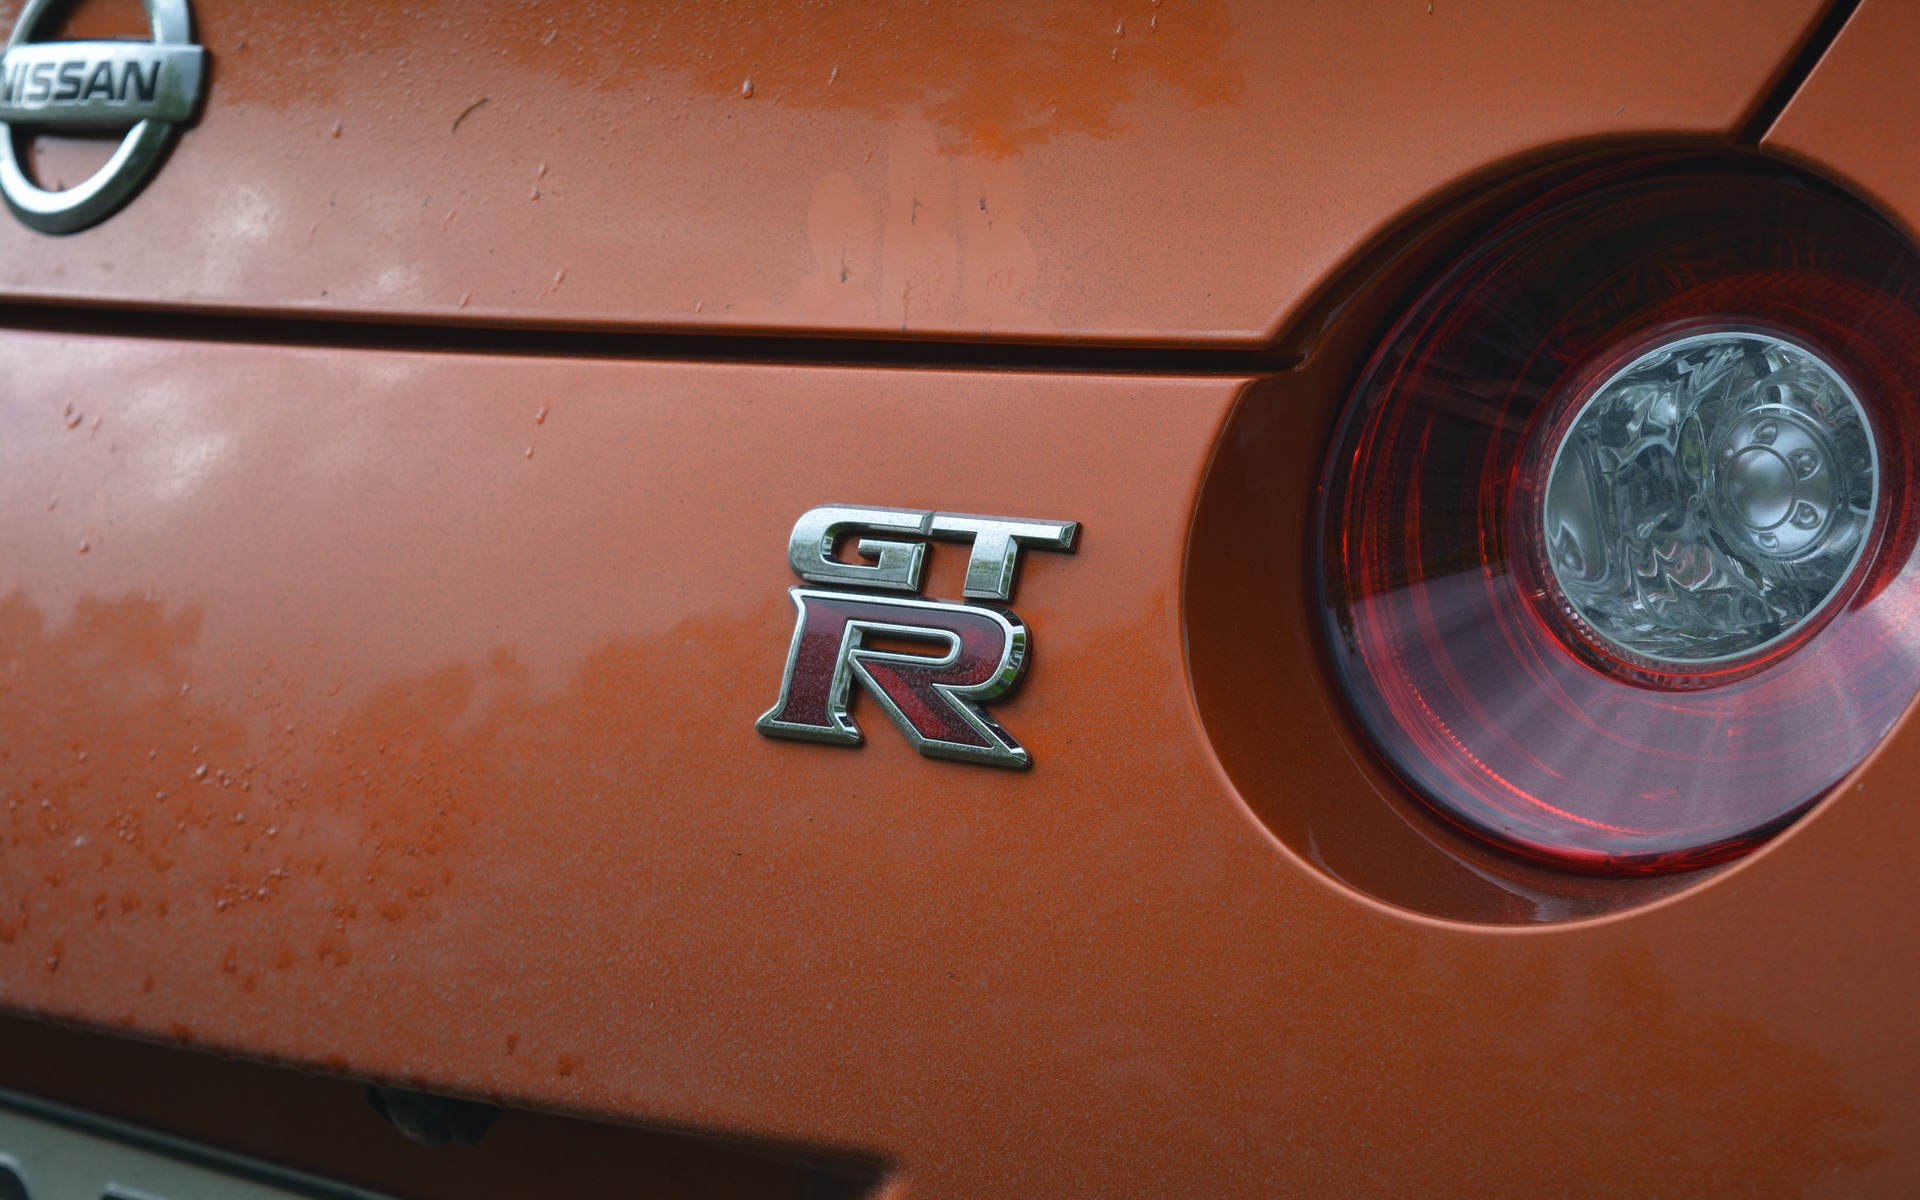 2017 Nissan GT-R